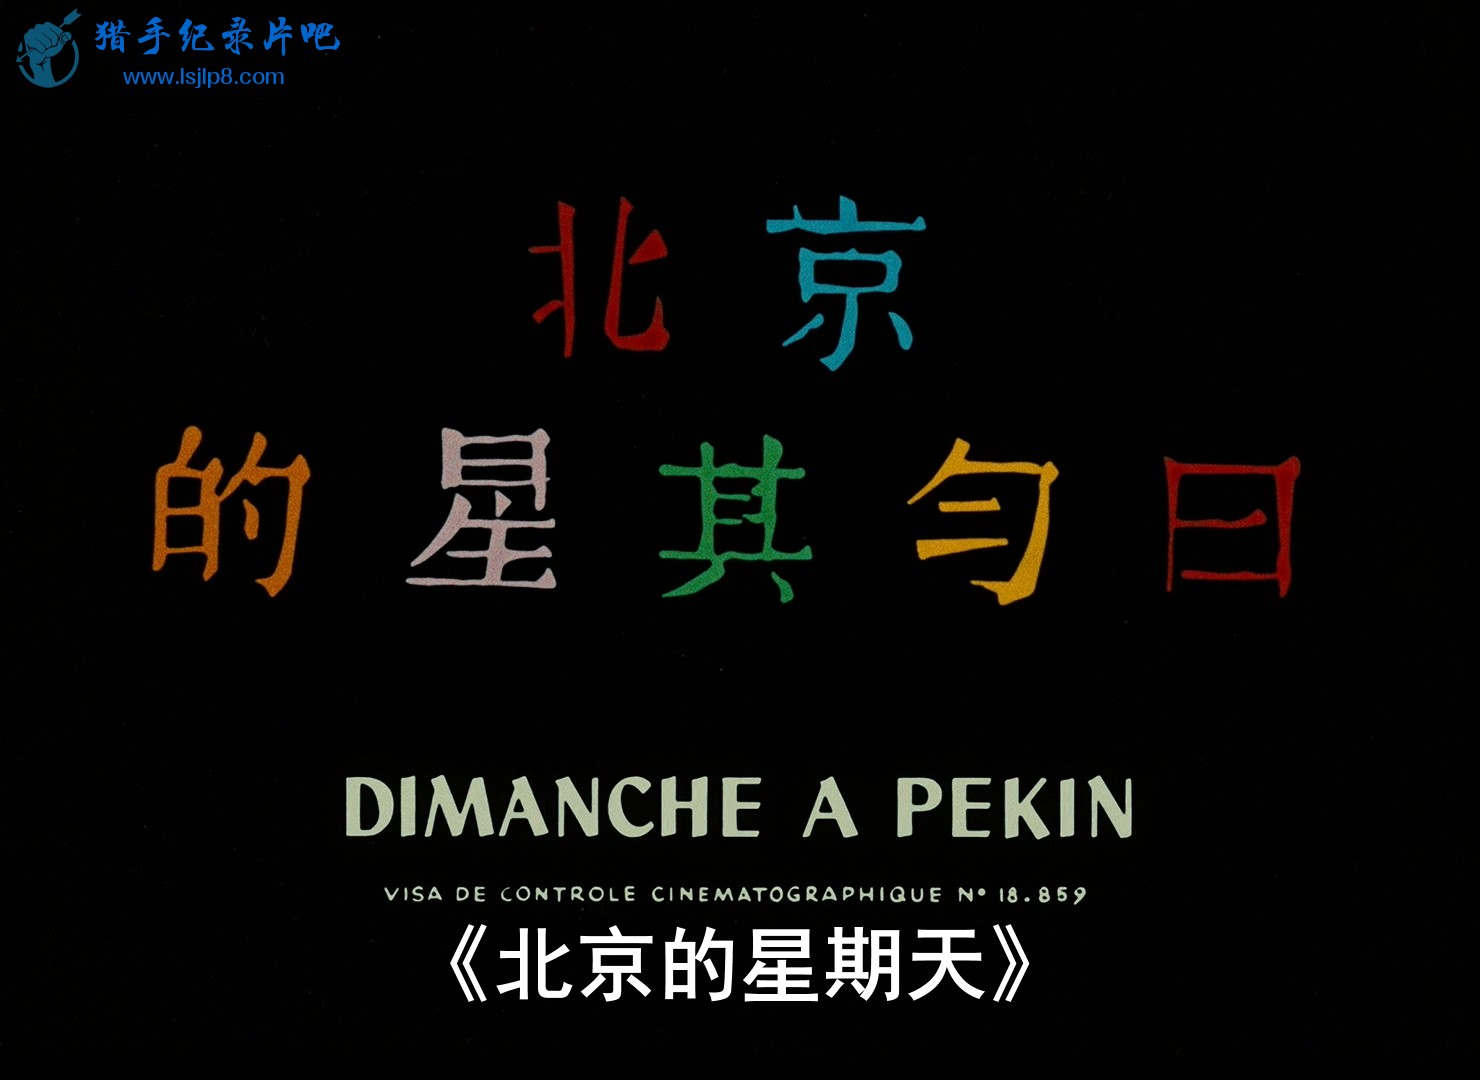  Dimanche  Pekin (1956).1080P.mkv_20200627_125706.796.jpg